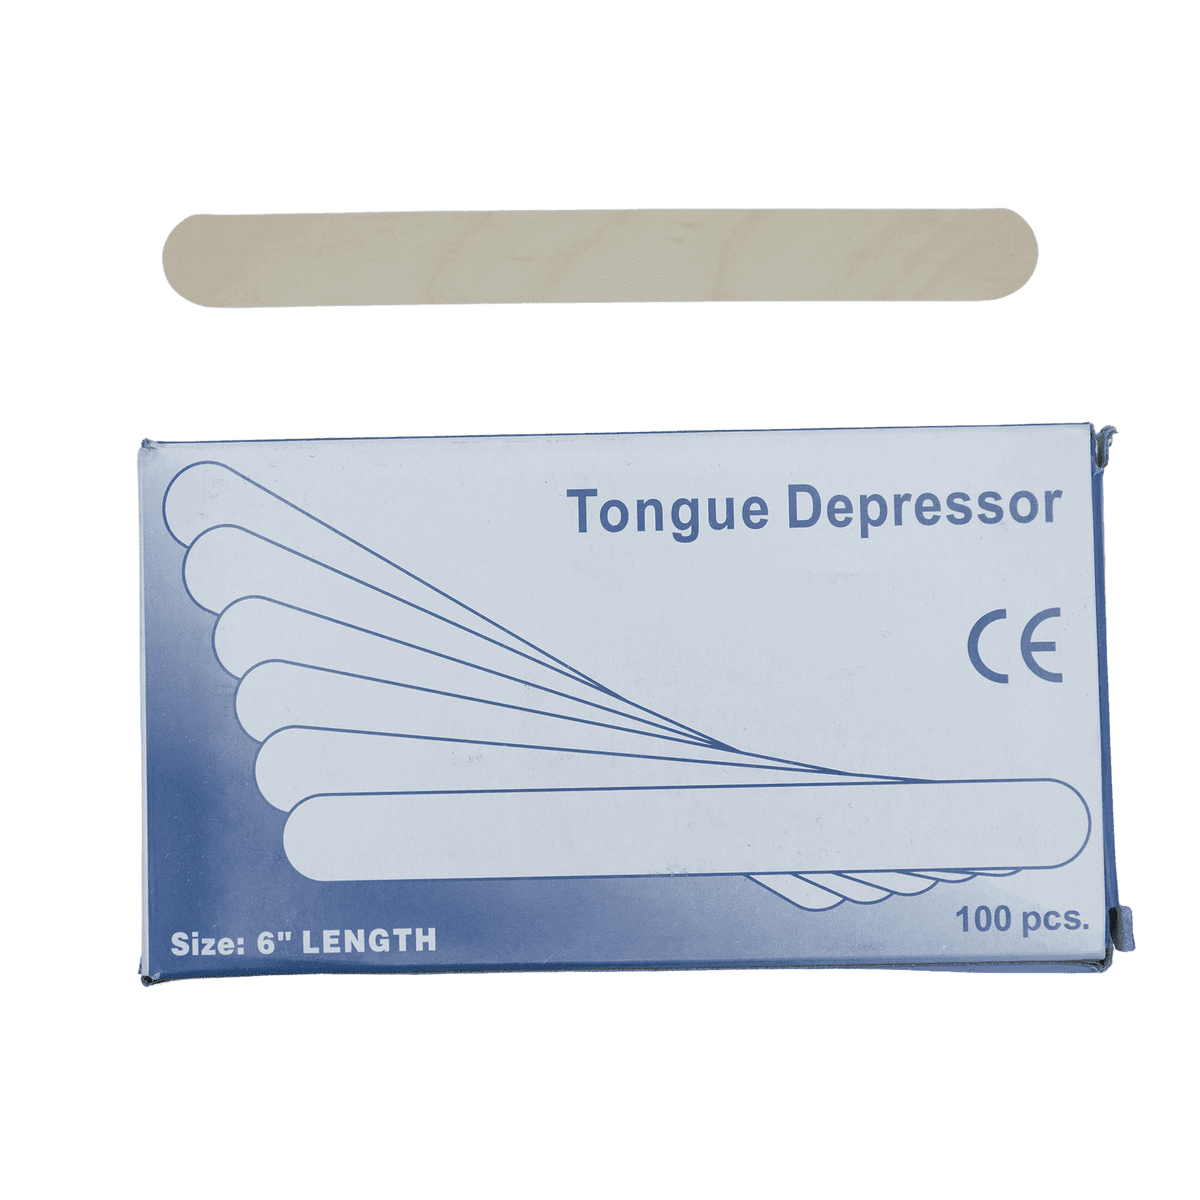 Sterile tongue depressors